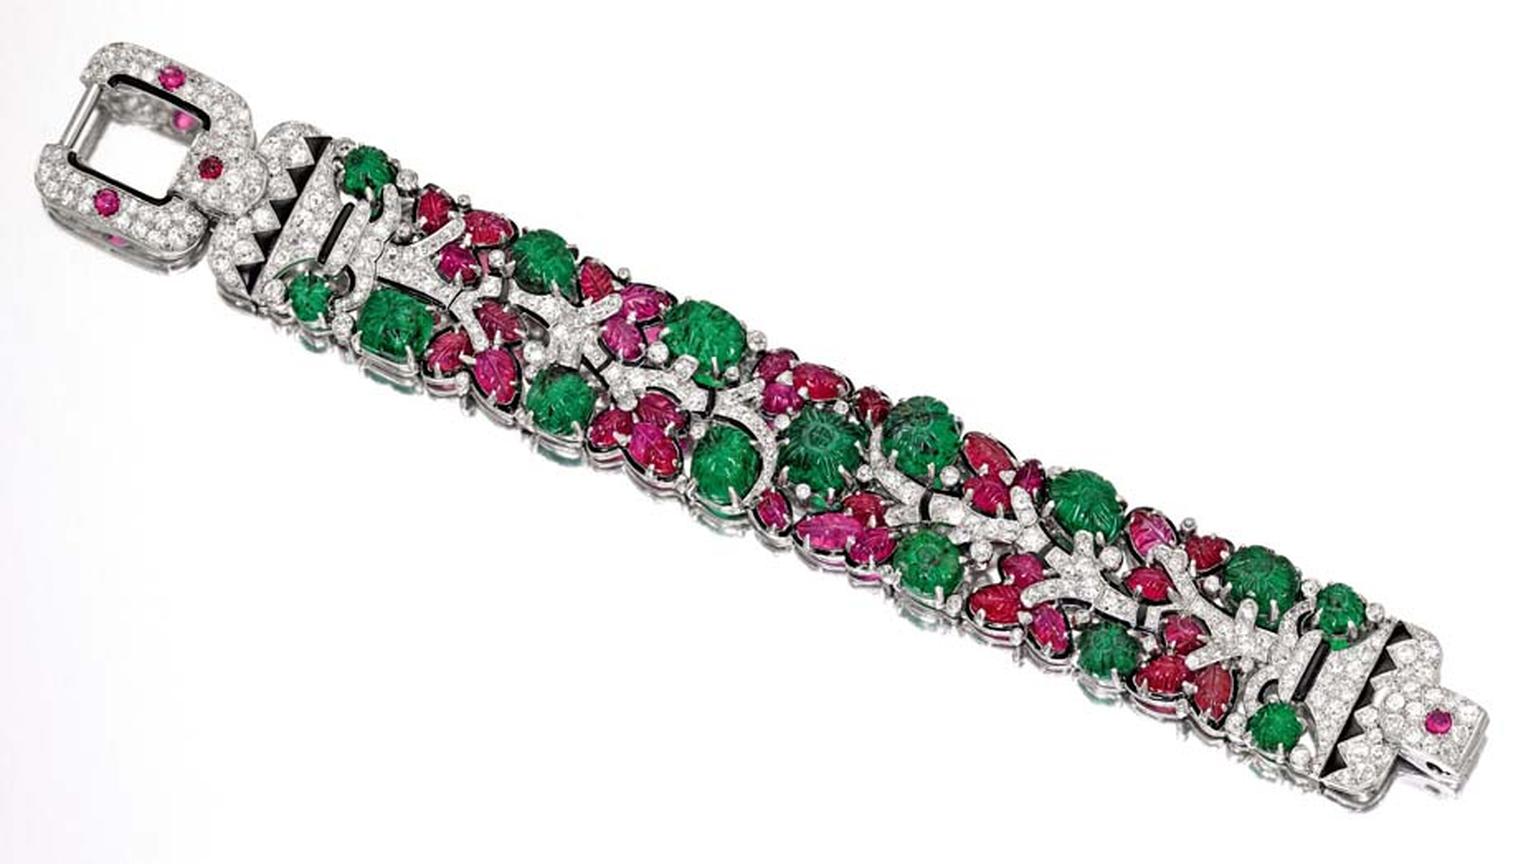 Iconic platinum, emerald, ruby, diamond and enamel Tutti Frutti bracelet by Cartier, circa 1928 (estimate: $1.3-1.8 million).